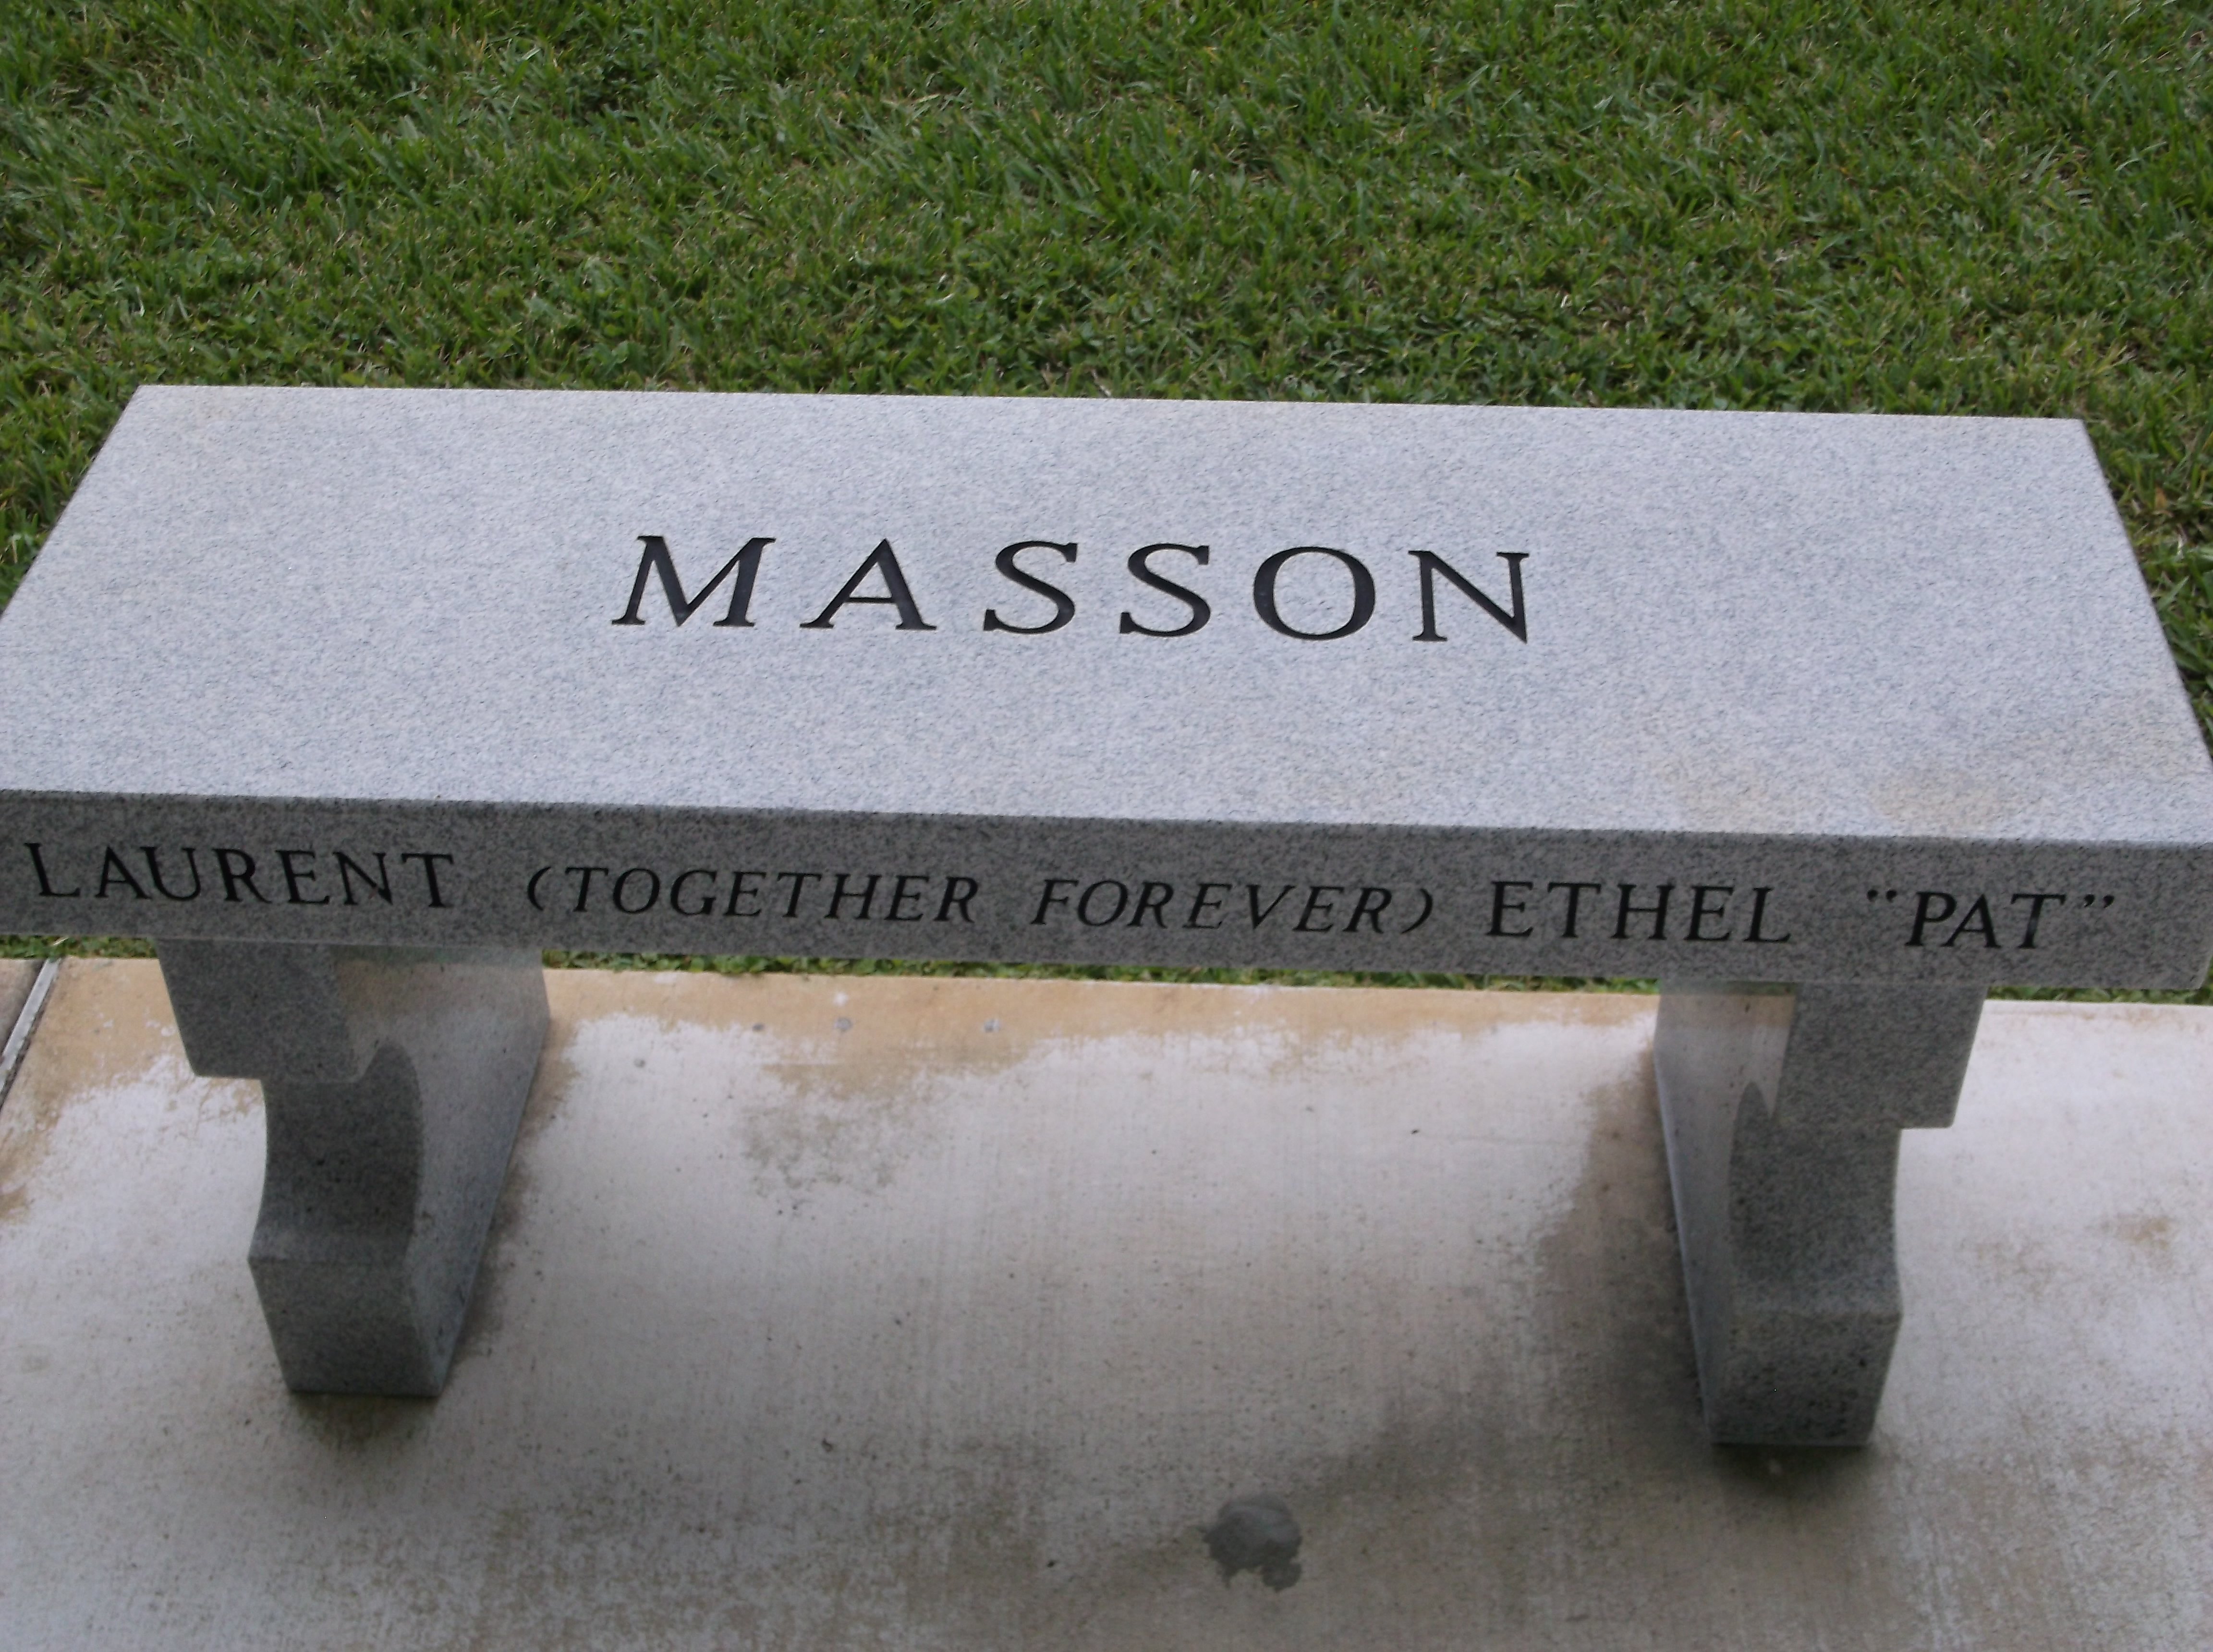 Ethel T "Pat" Masson